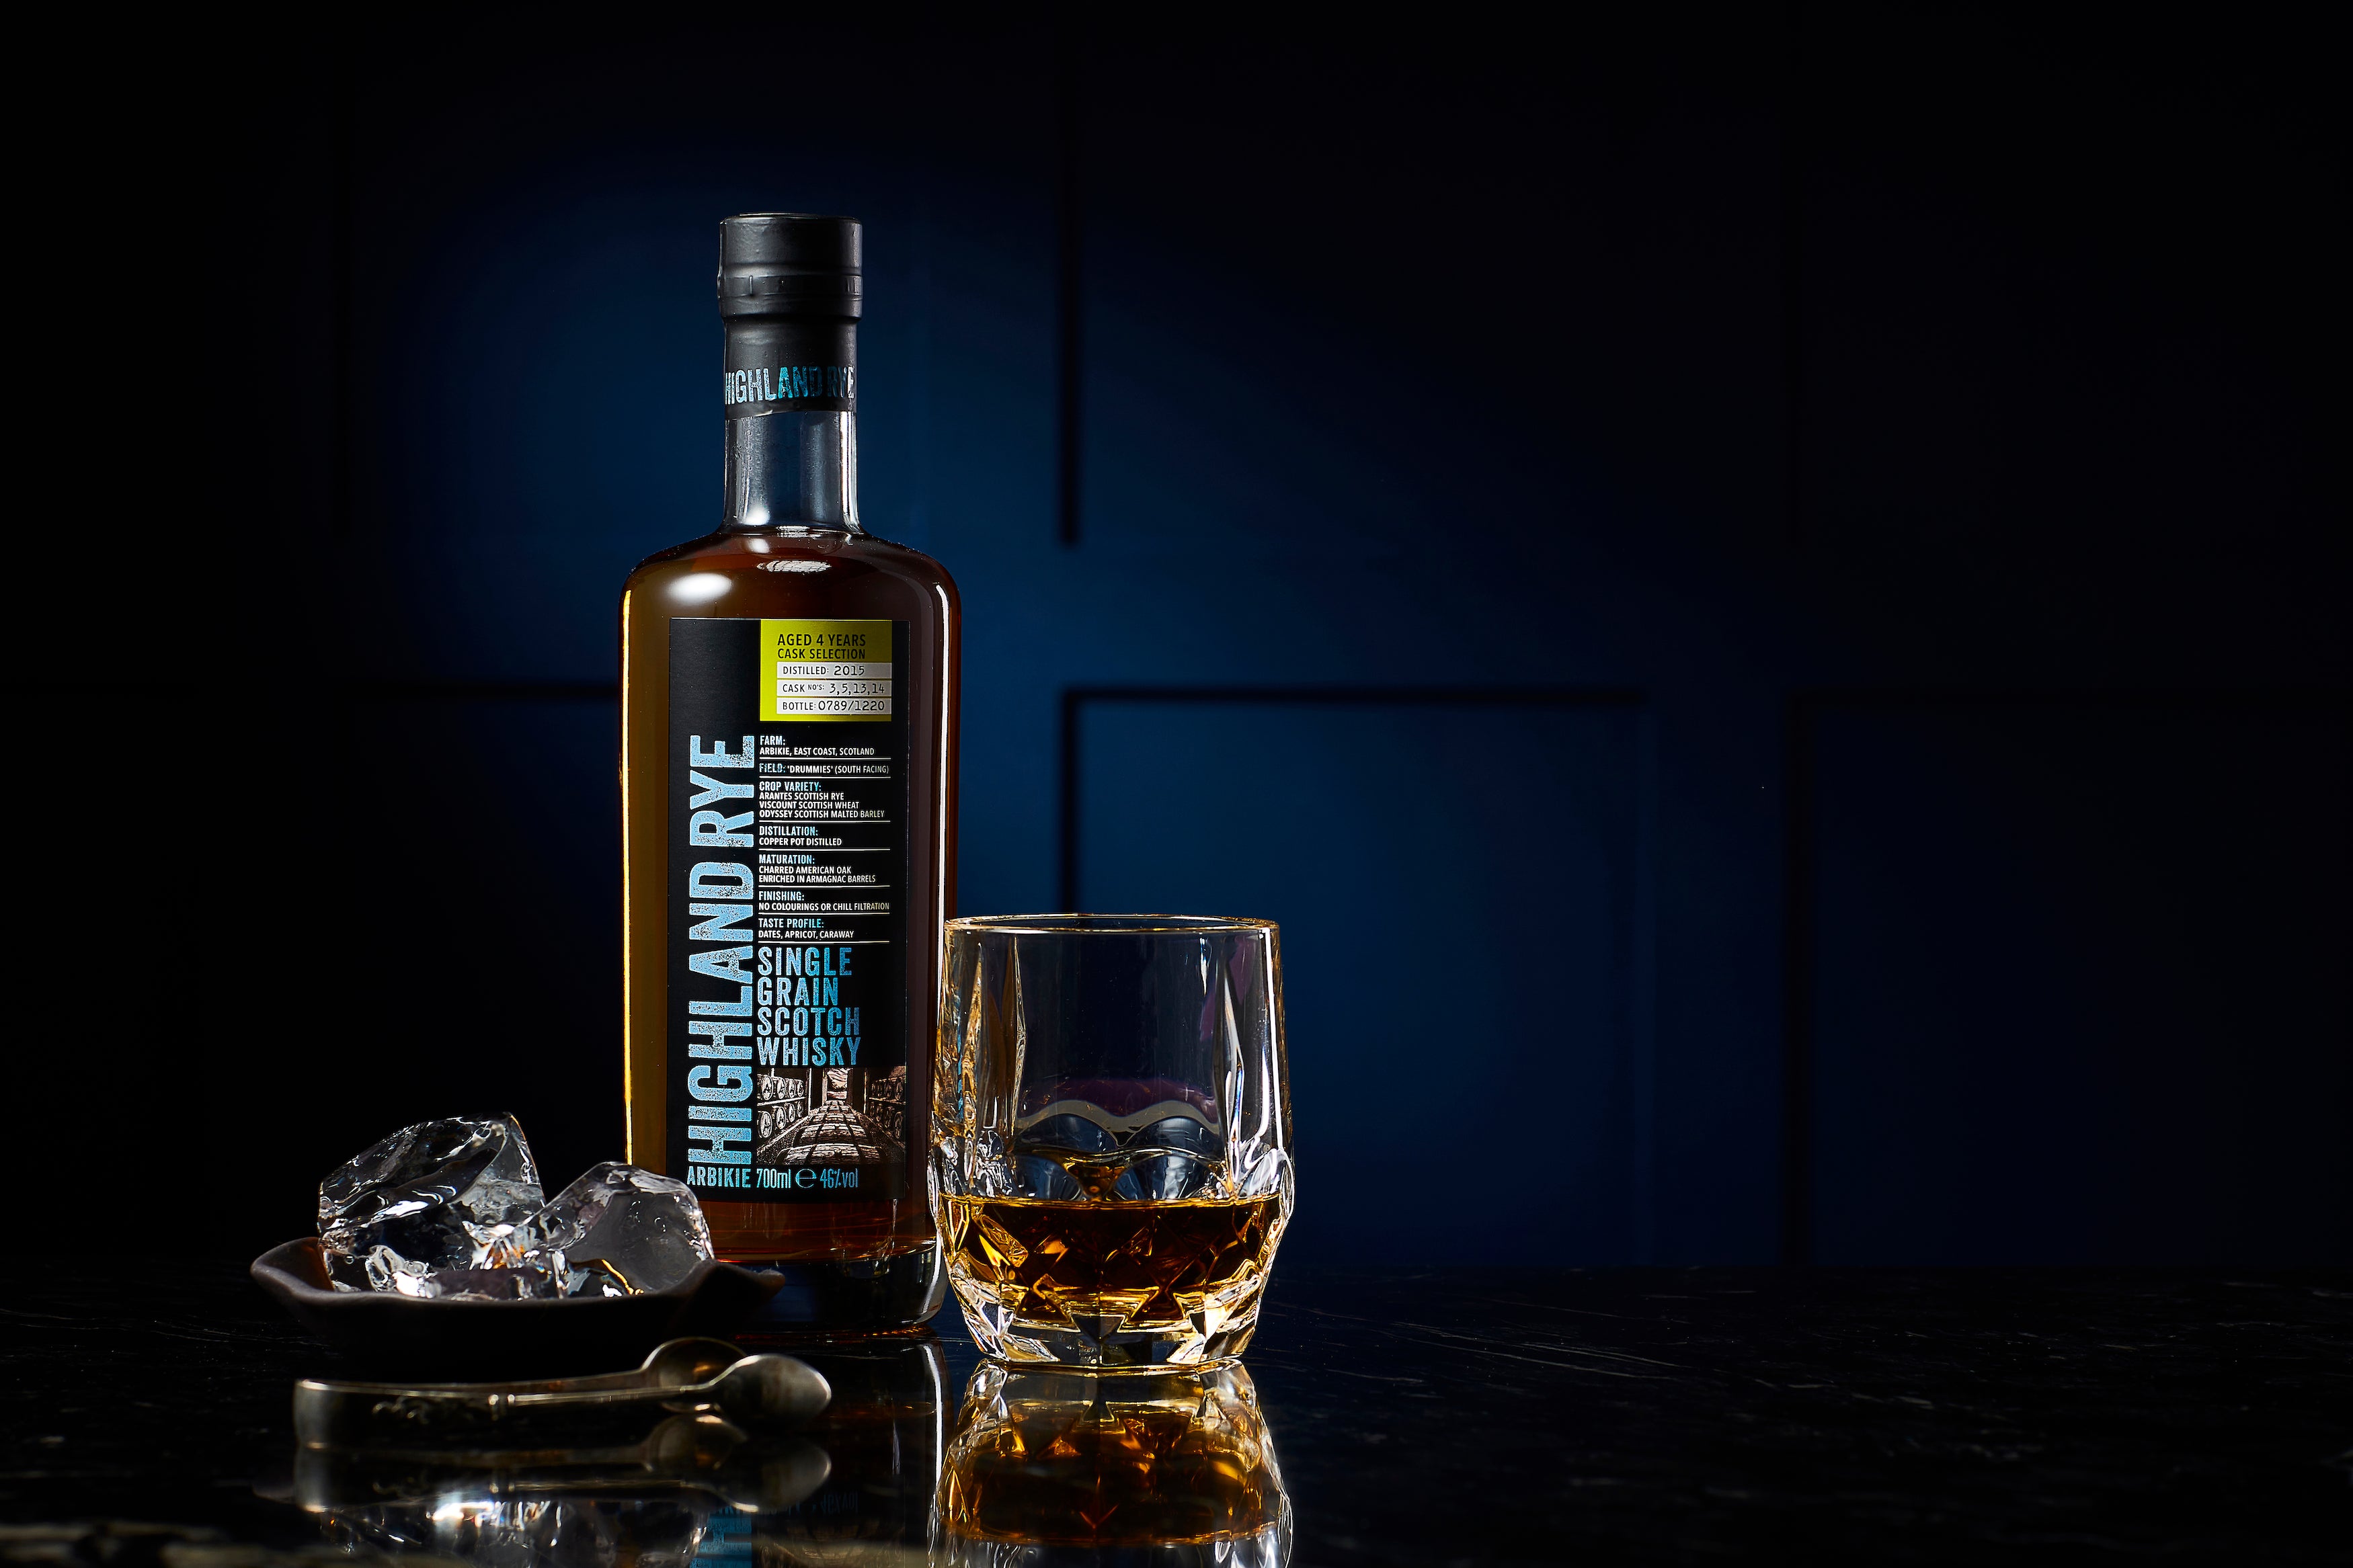 highland rye 1794 whisky 70cl bottle with whisky dram